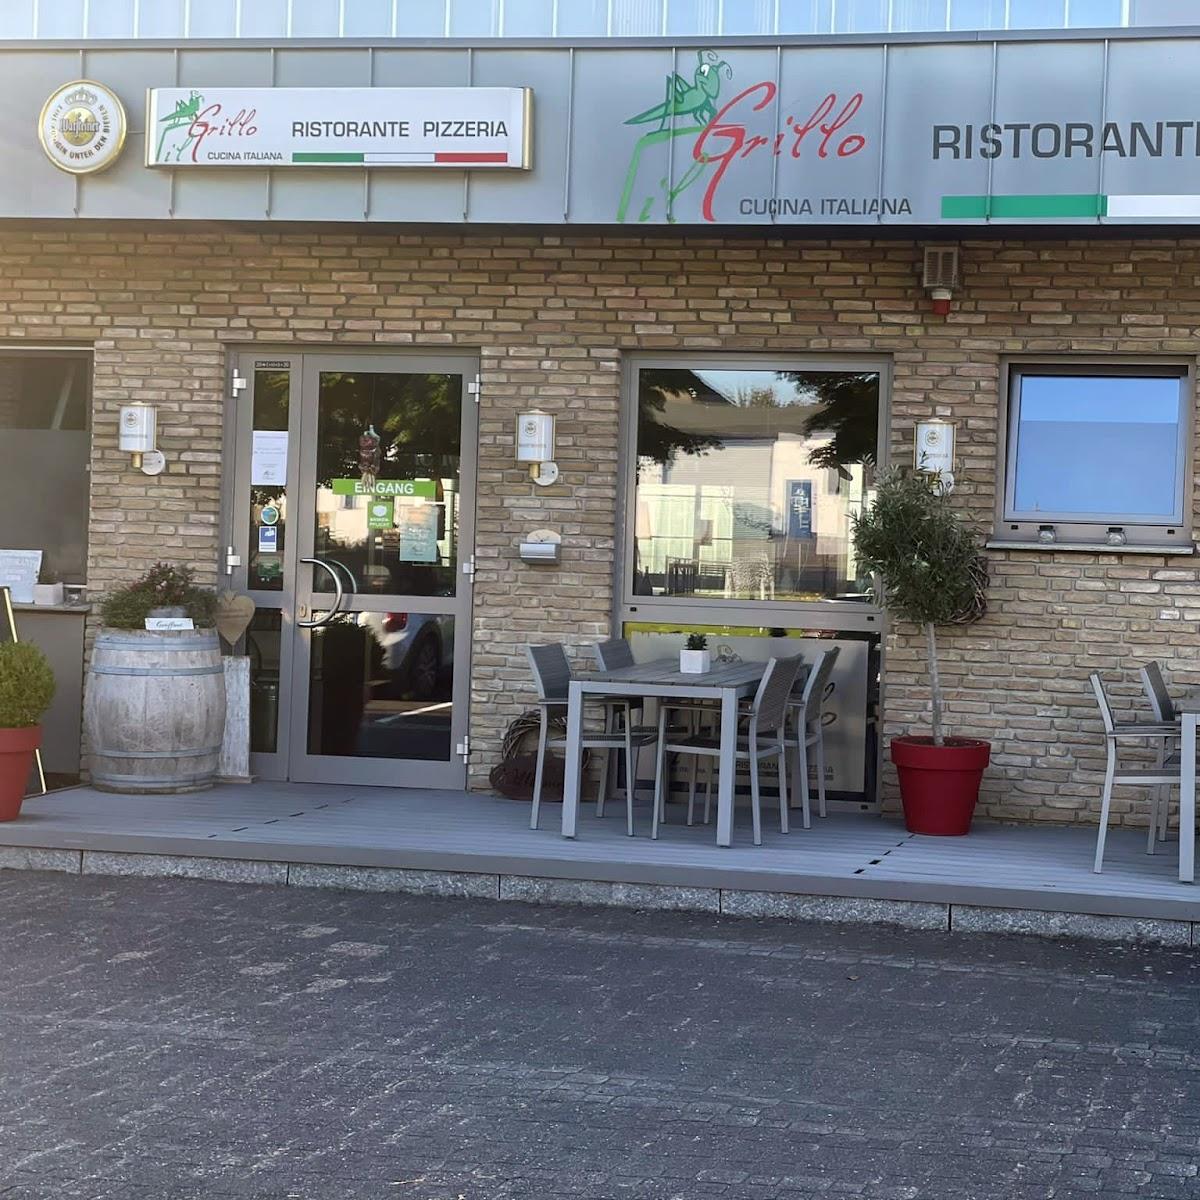 Restaurant "Il Grillo Ristorante Pizzeria Vinoteca" in Vlotho